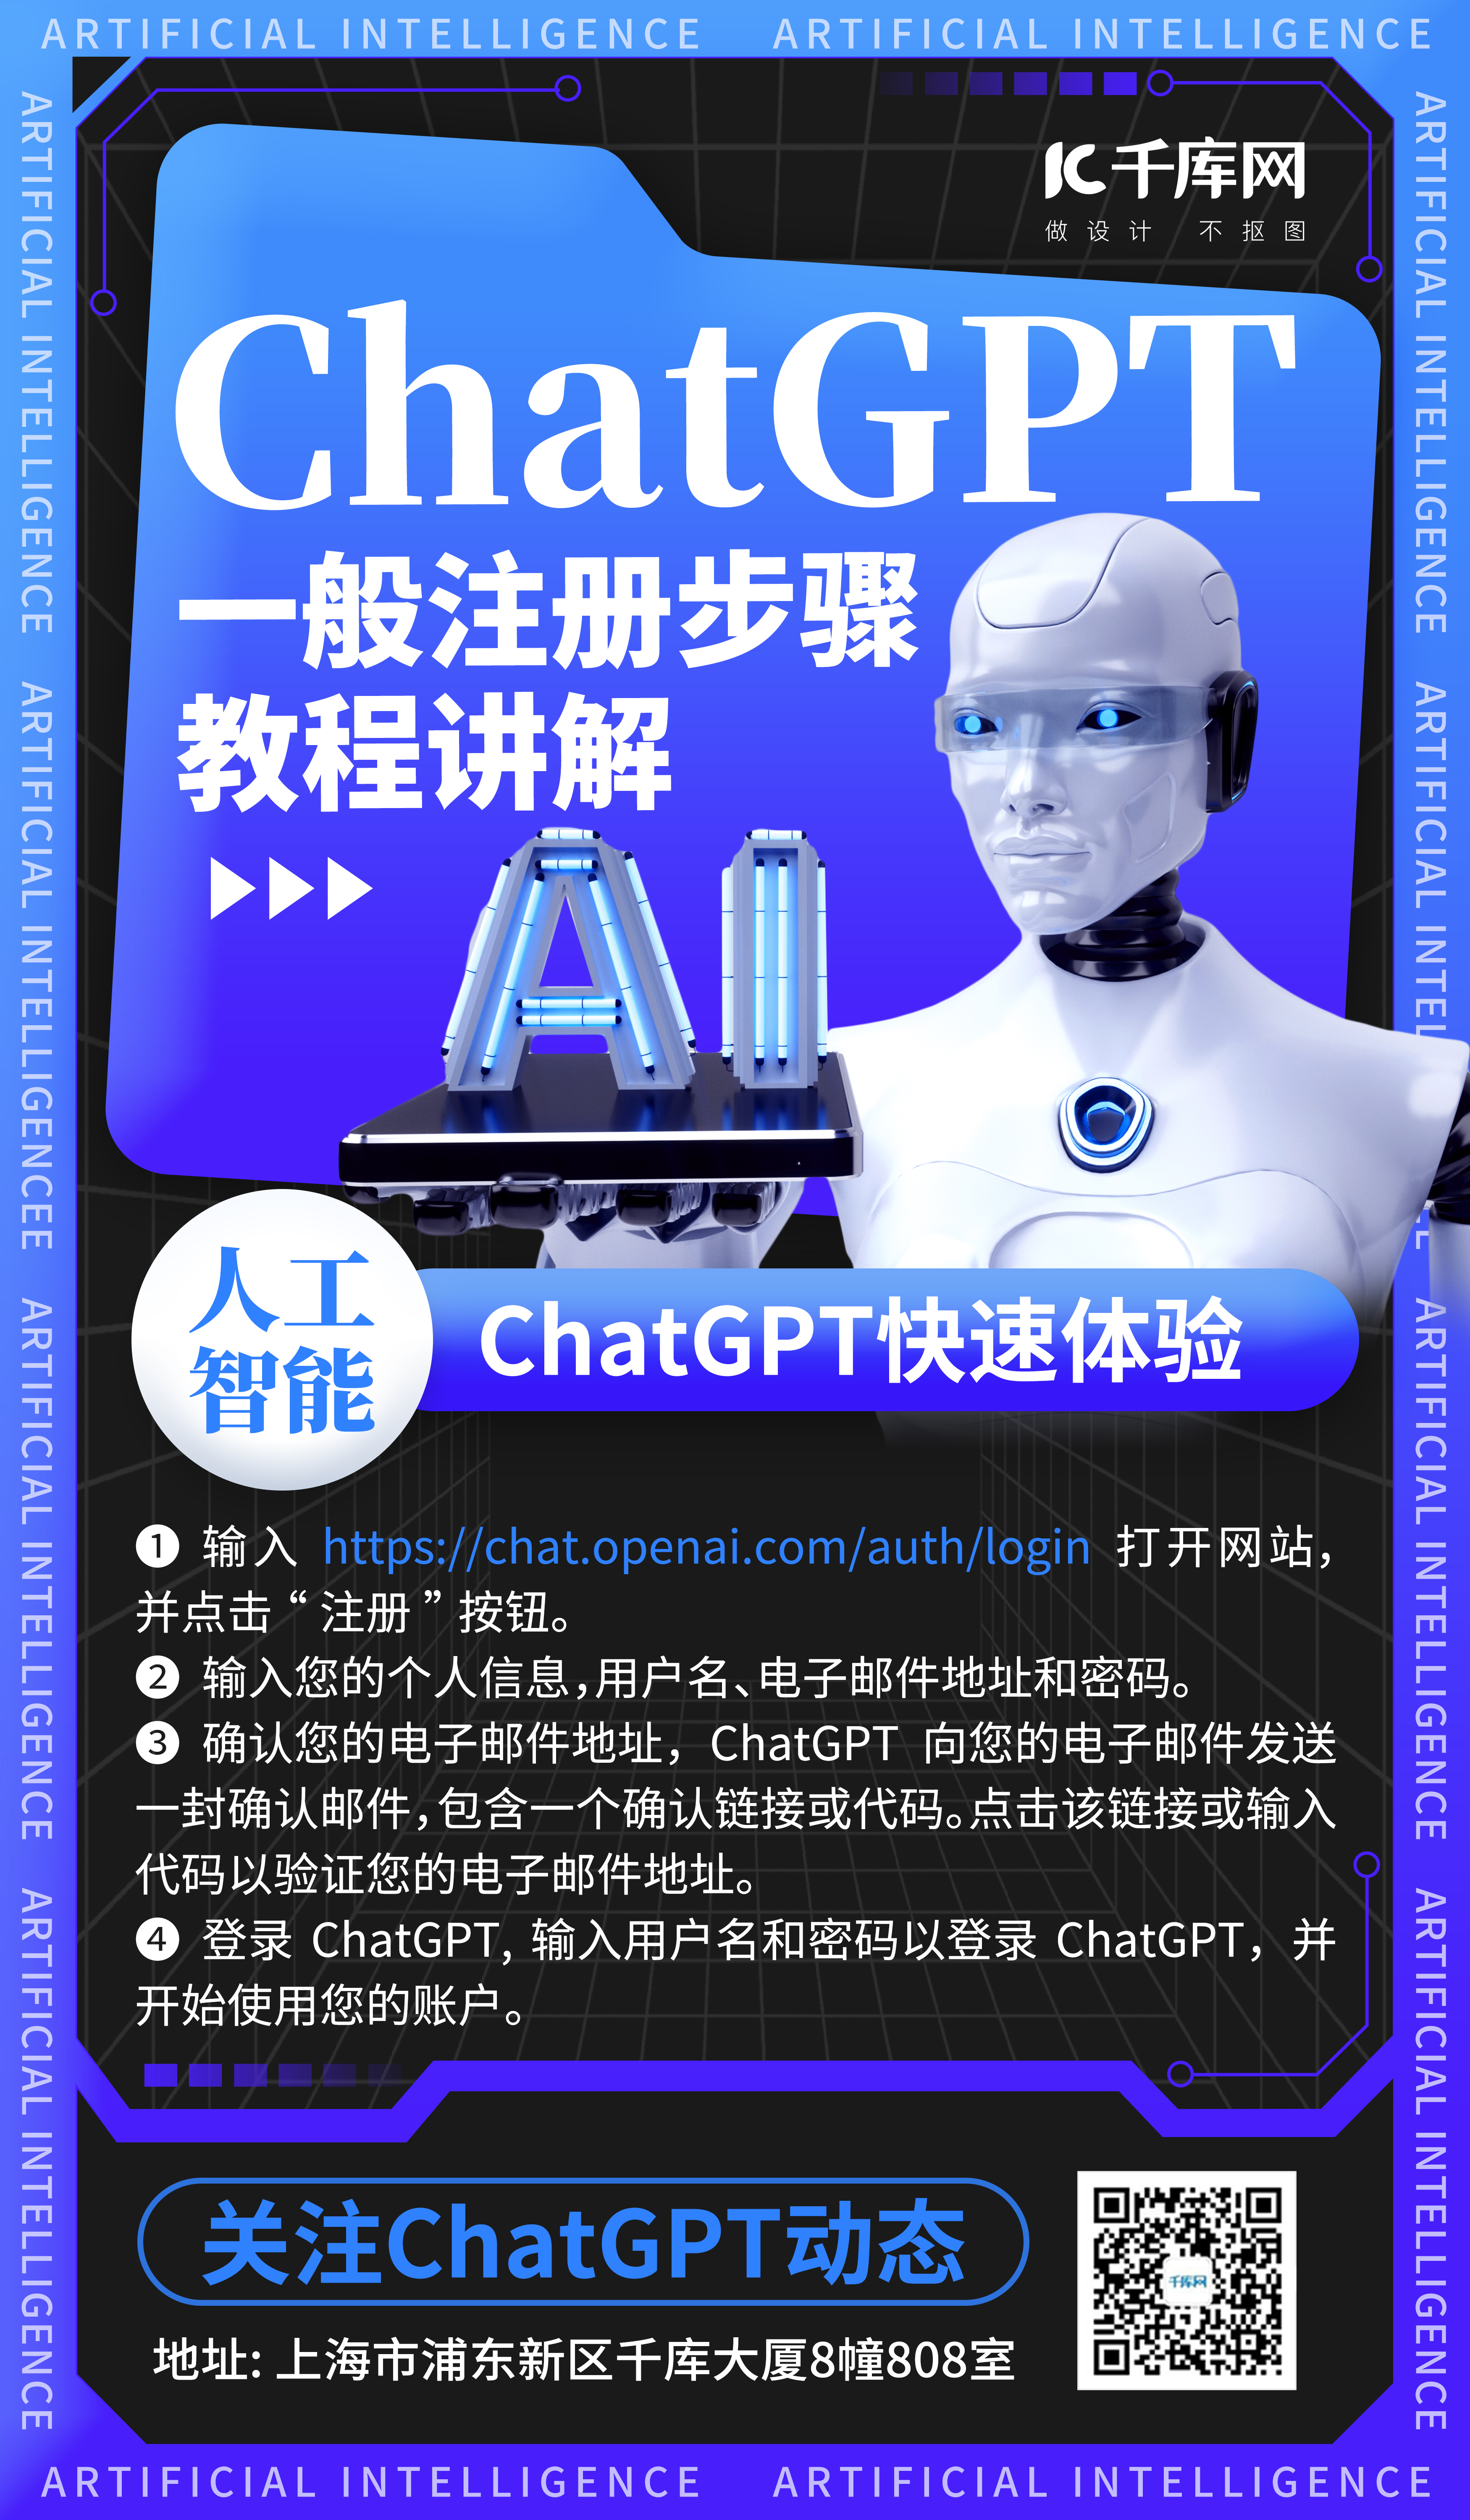 ChatGPT注册教程机器人蓝色创意海报图片